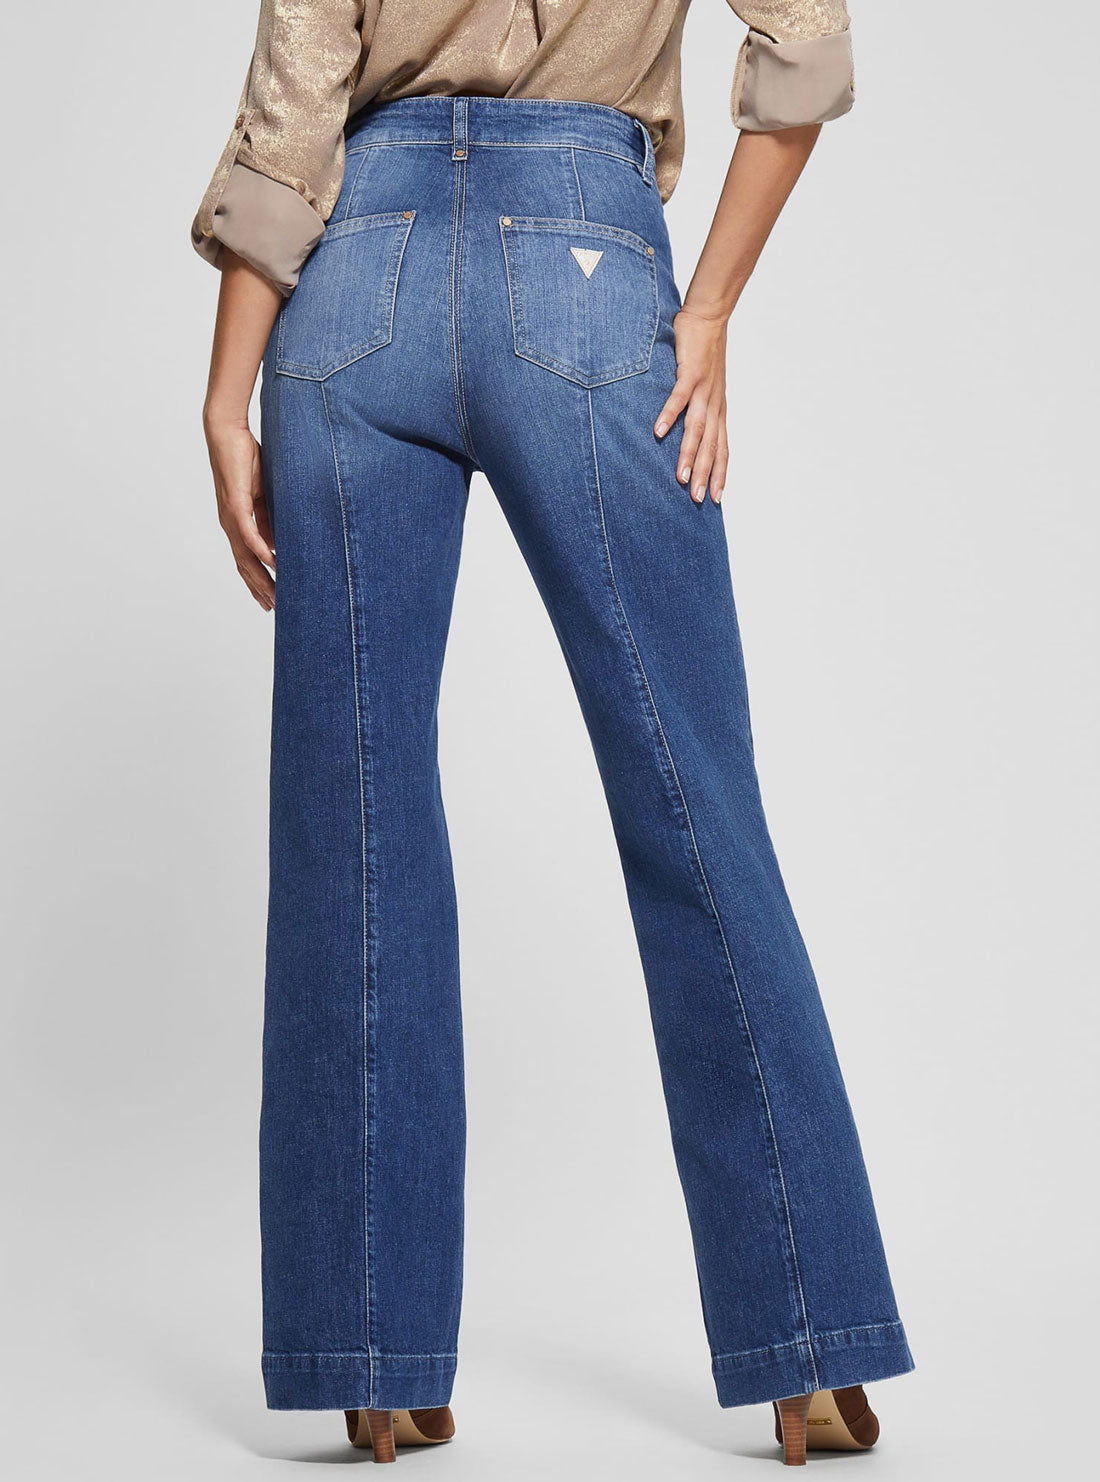 Blue Faye Flare Denim Jeans | GUESS Women's Apparel | back view